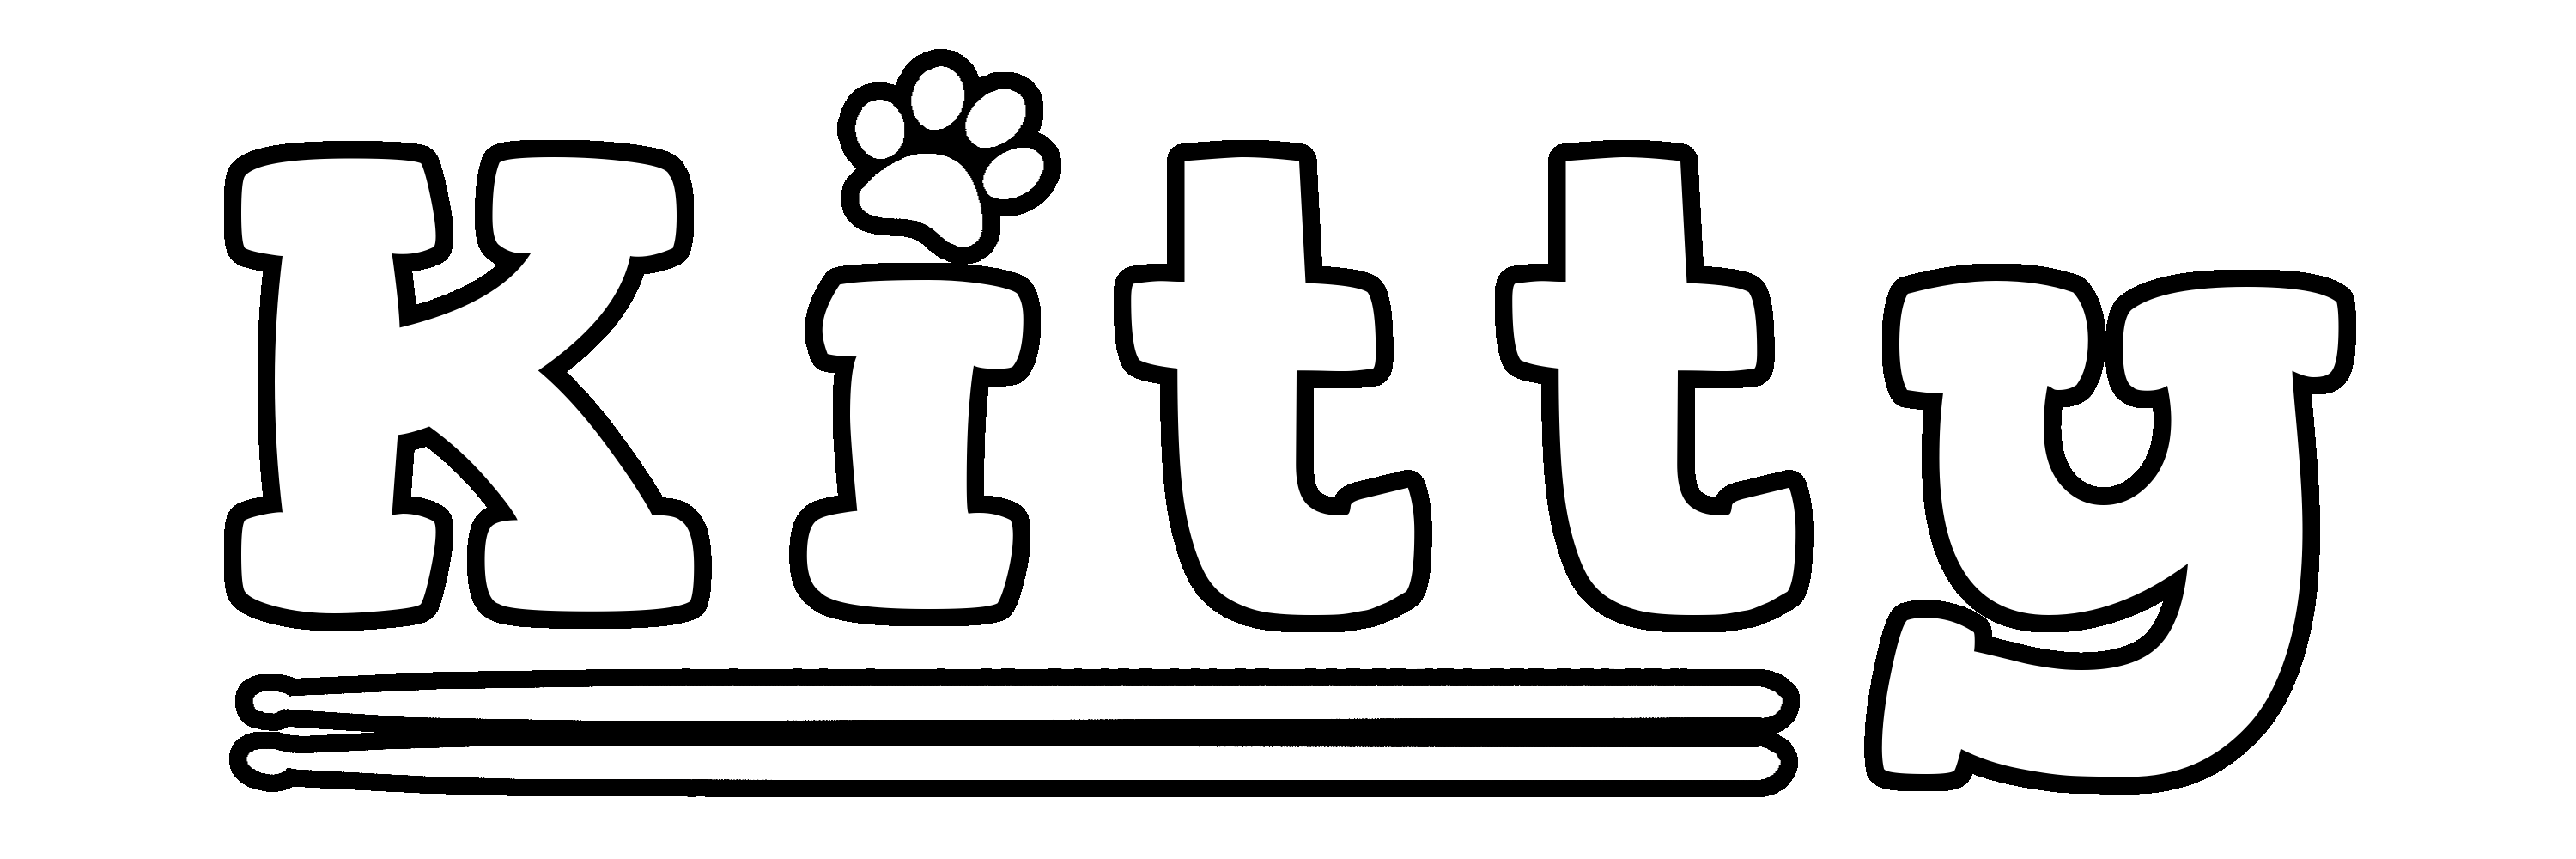 kitty-logo.png